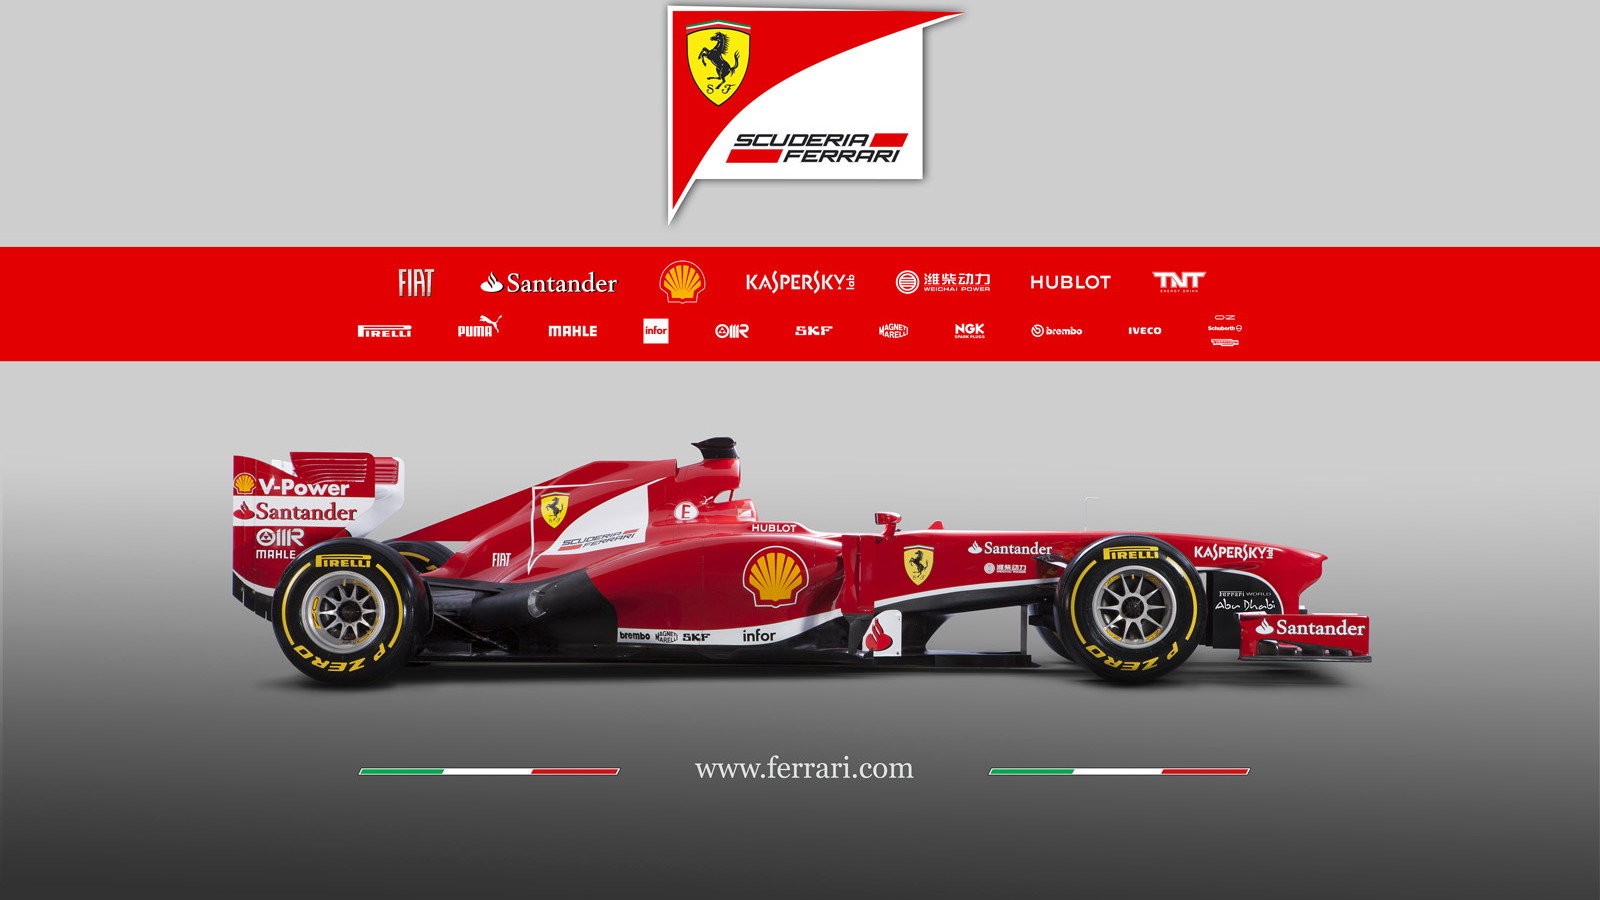 Ferrari's 2013 Formula One car, the F138